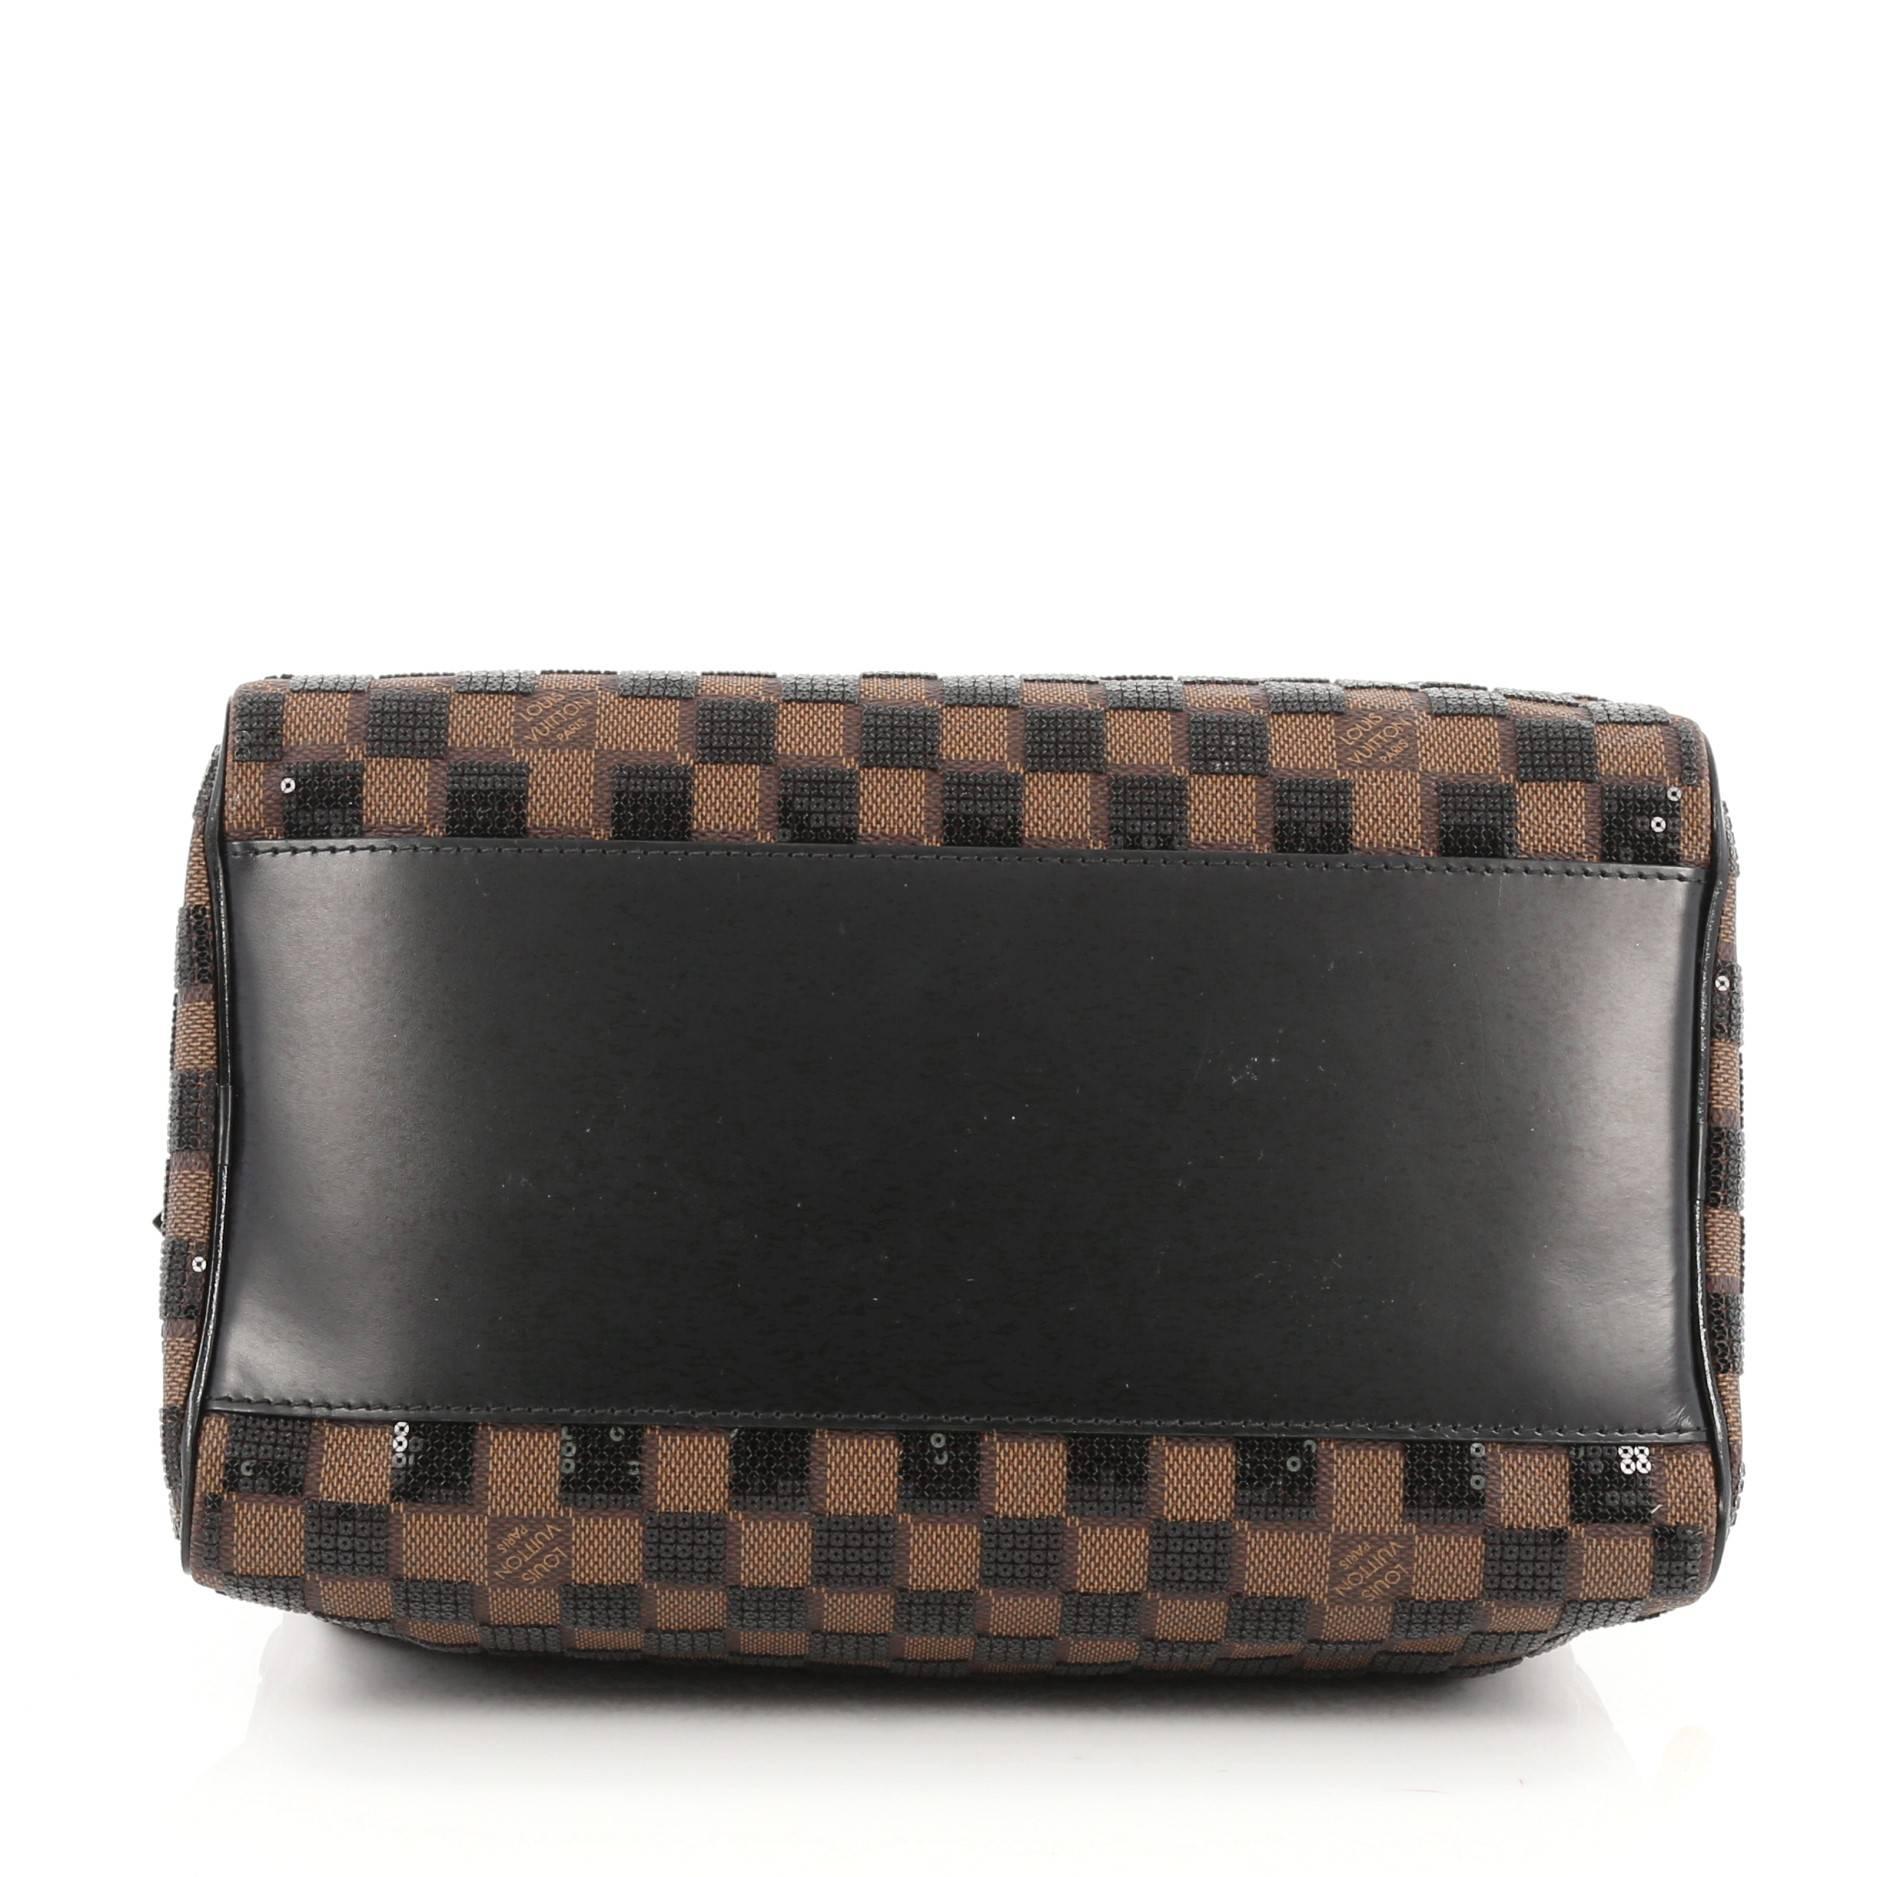 Louis Vuitton Speedy Handbag Damier Paillettes 30 1